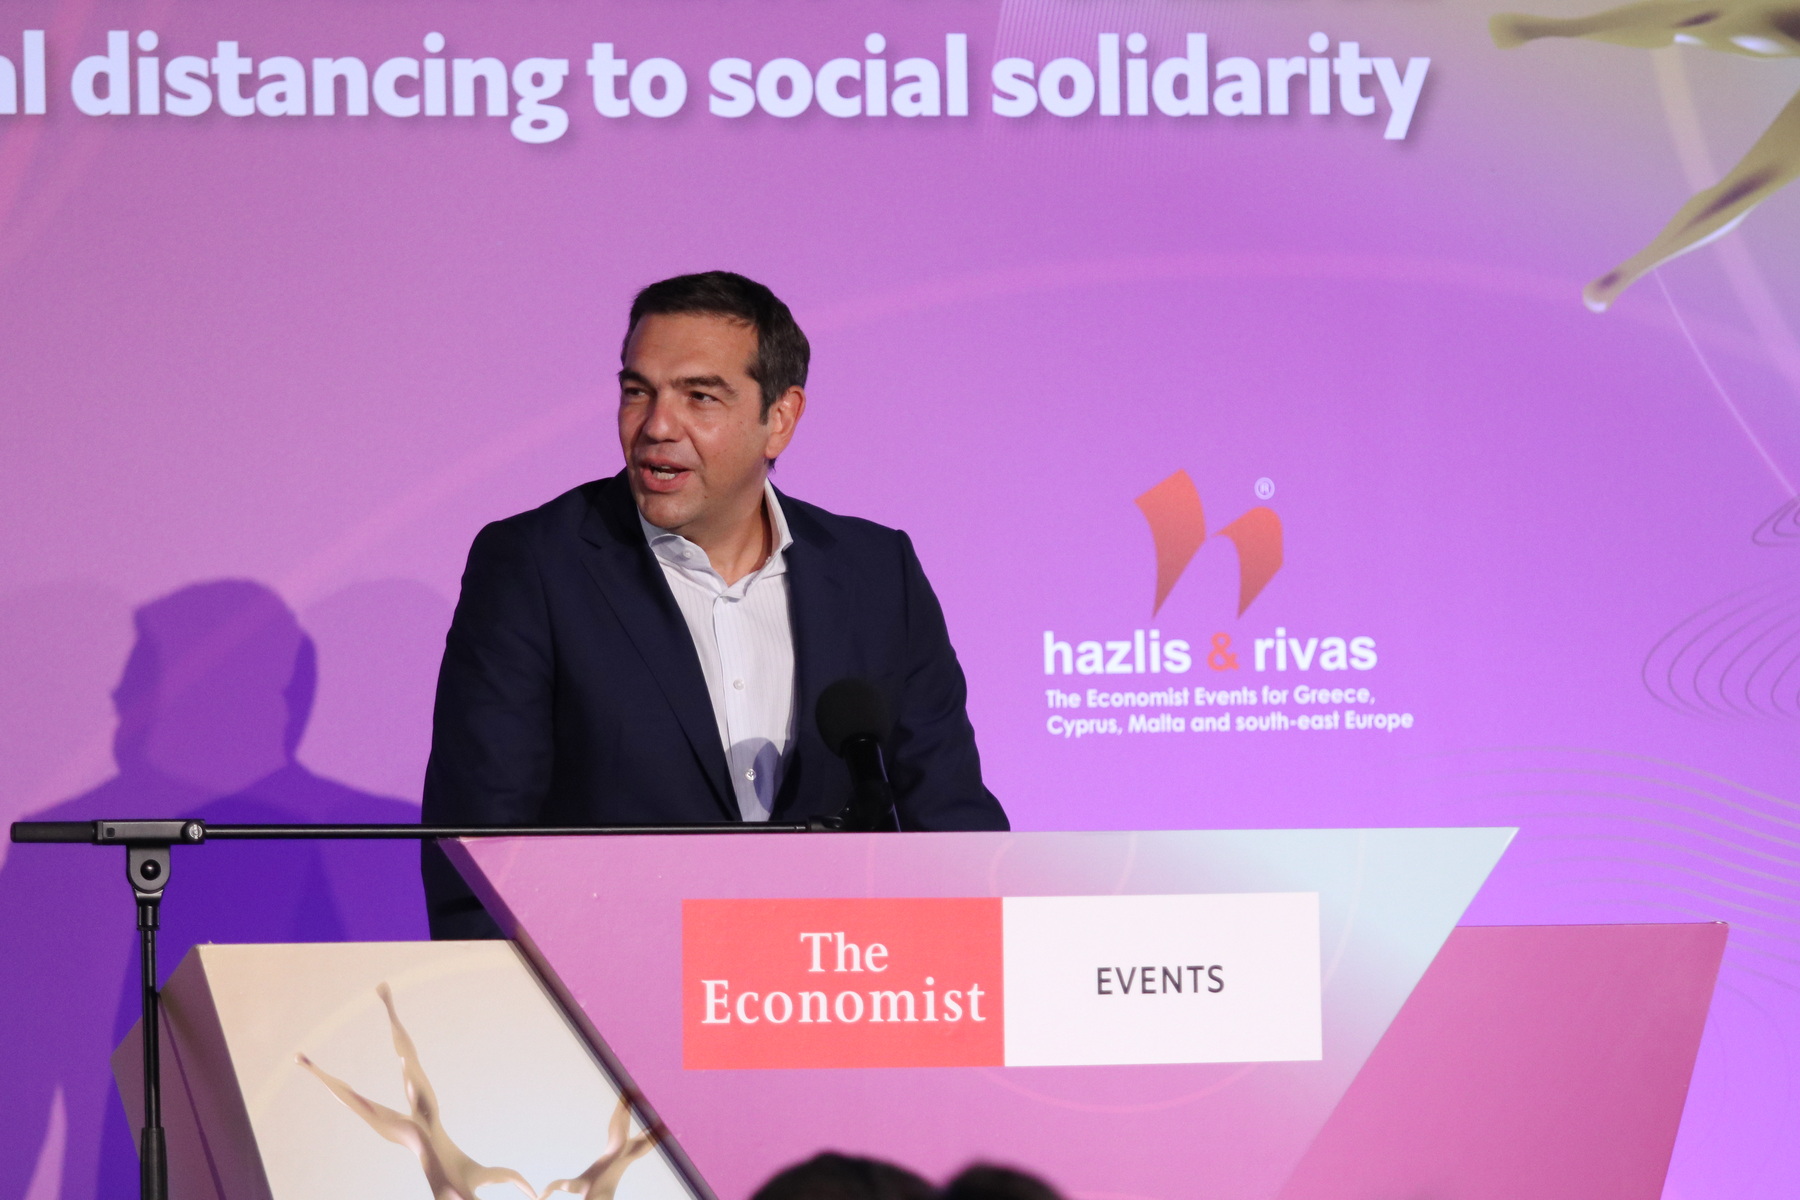 Aλ. Τσίπρας - Economist: “Η κοινωνική αλληλεγγύη είναι σήμερα το αναγκαίο αντίδοτο τόσο στην απόγνωση, τον ατομισμό αλλά και τον διχασμό"